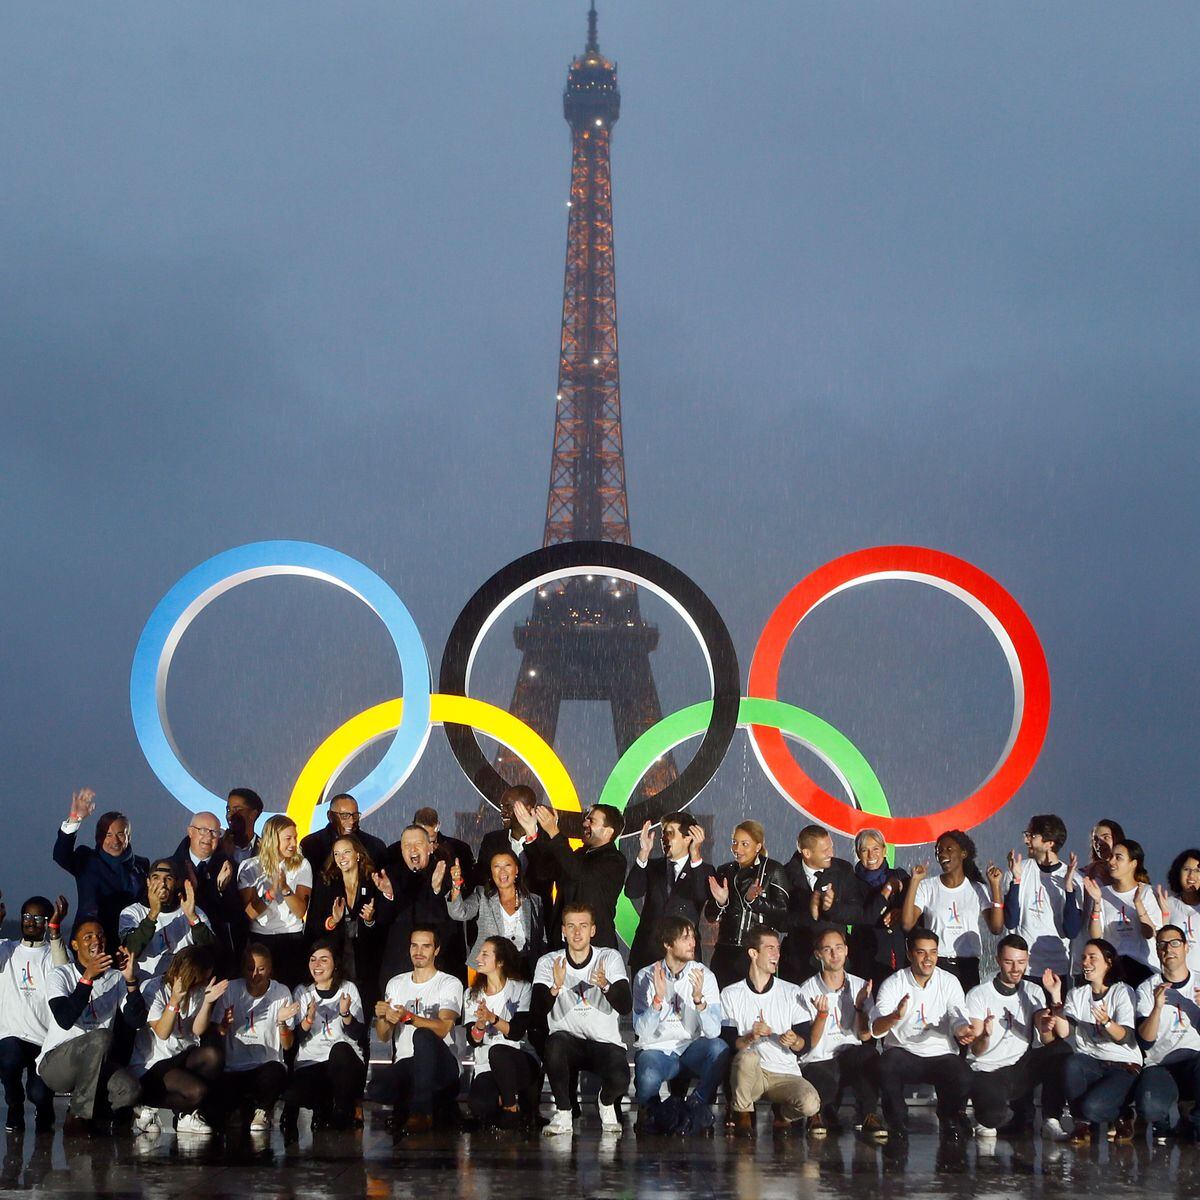 Jogos Olímpicos Paris 2024: programa do COI anuncia novidades na vela